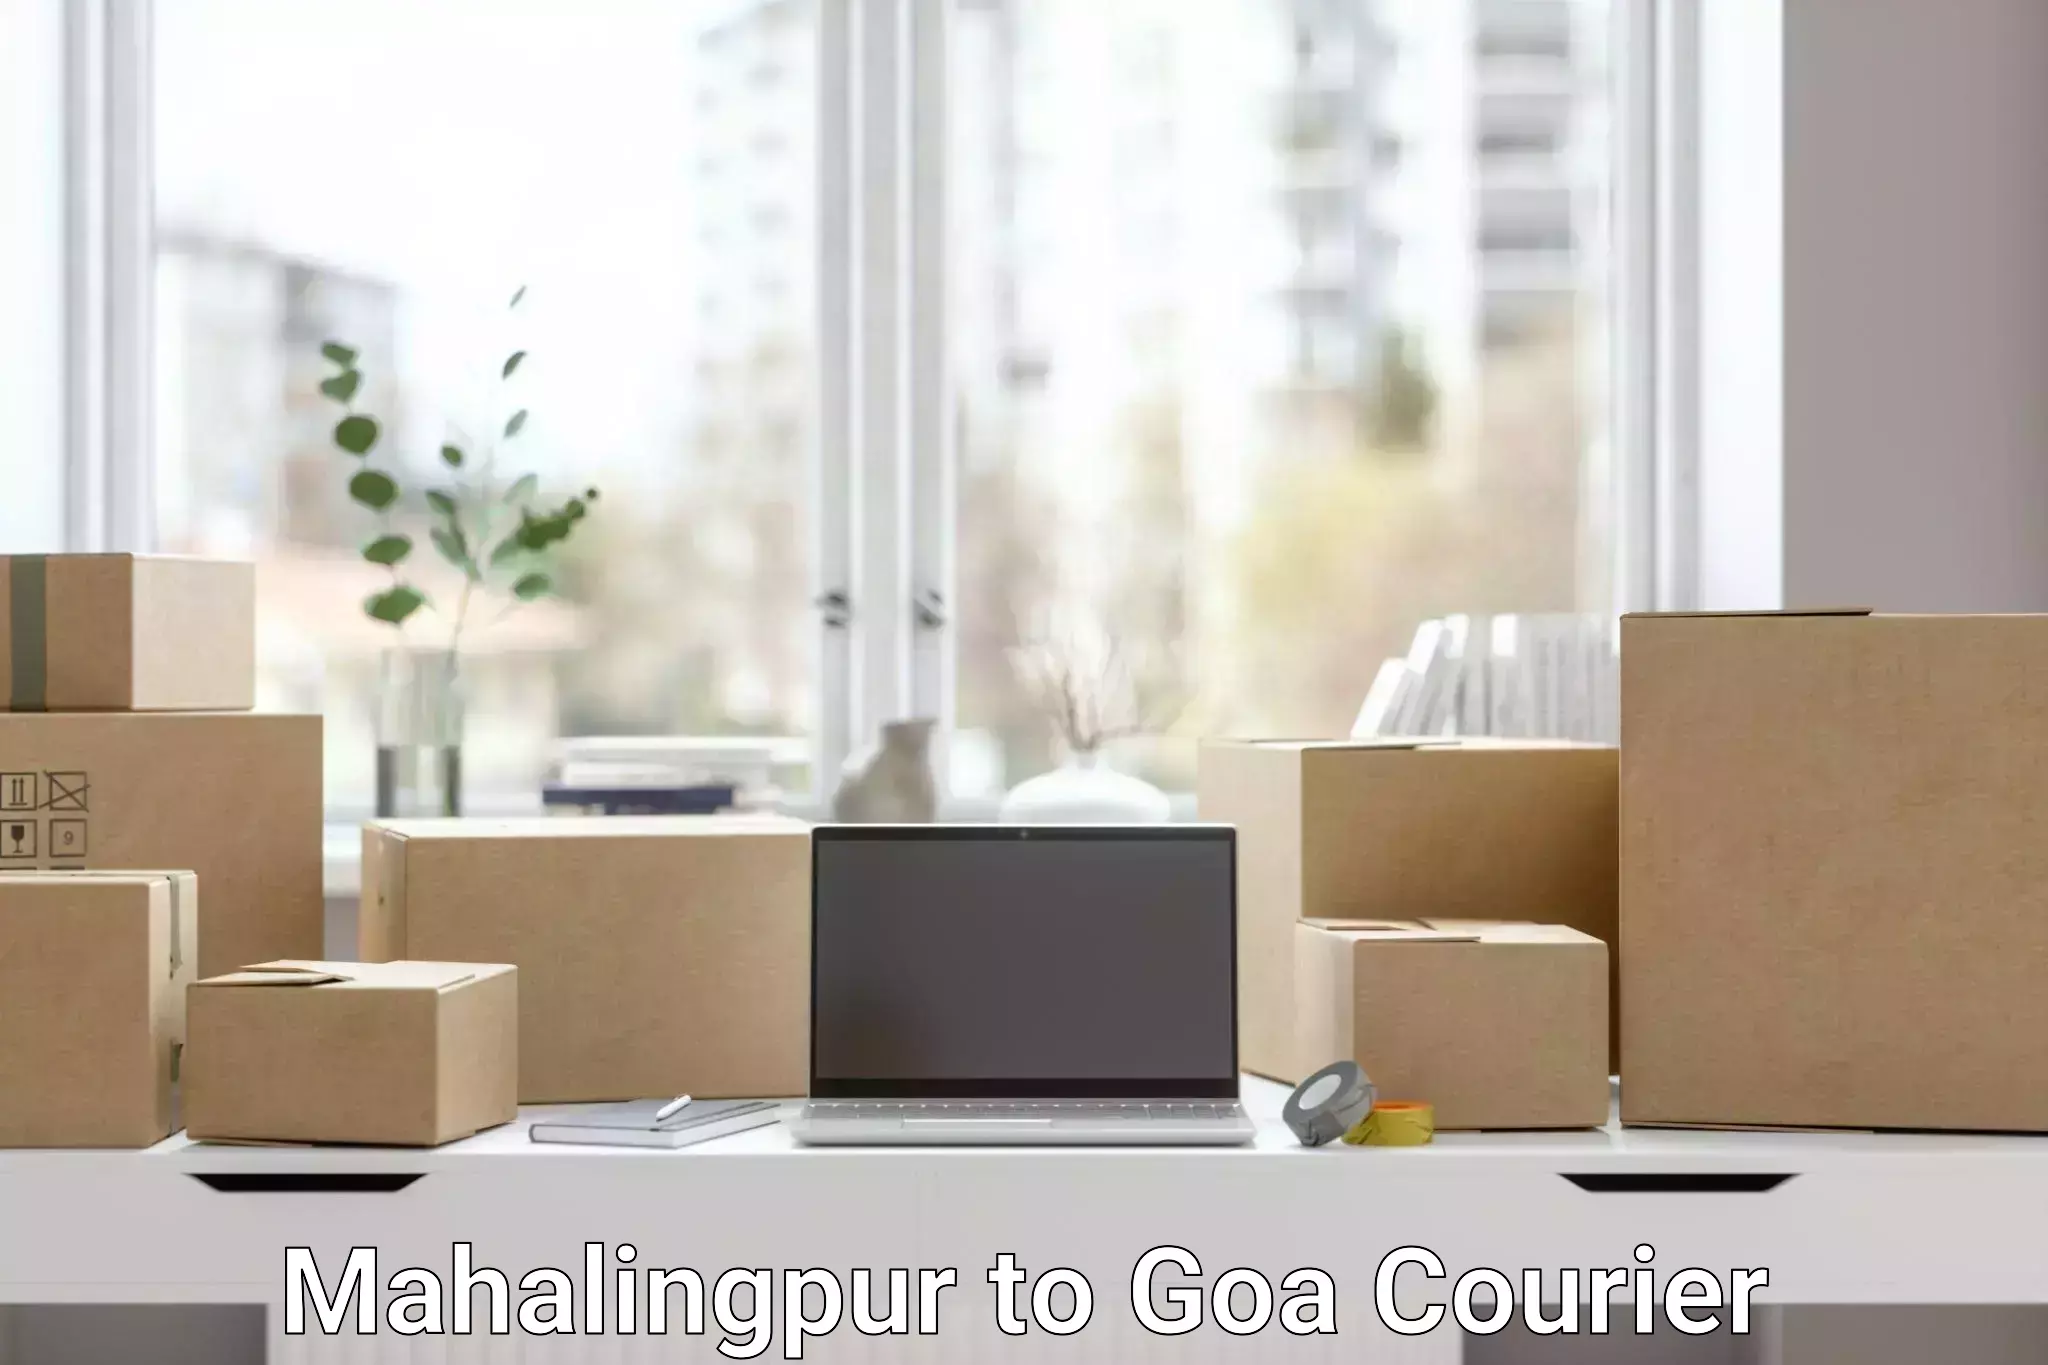 Global courier networks Mahalingpur to Panjim